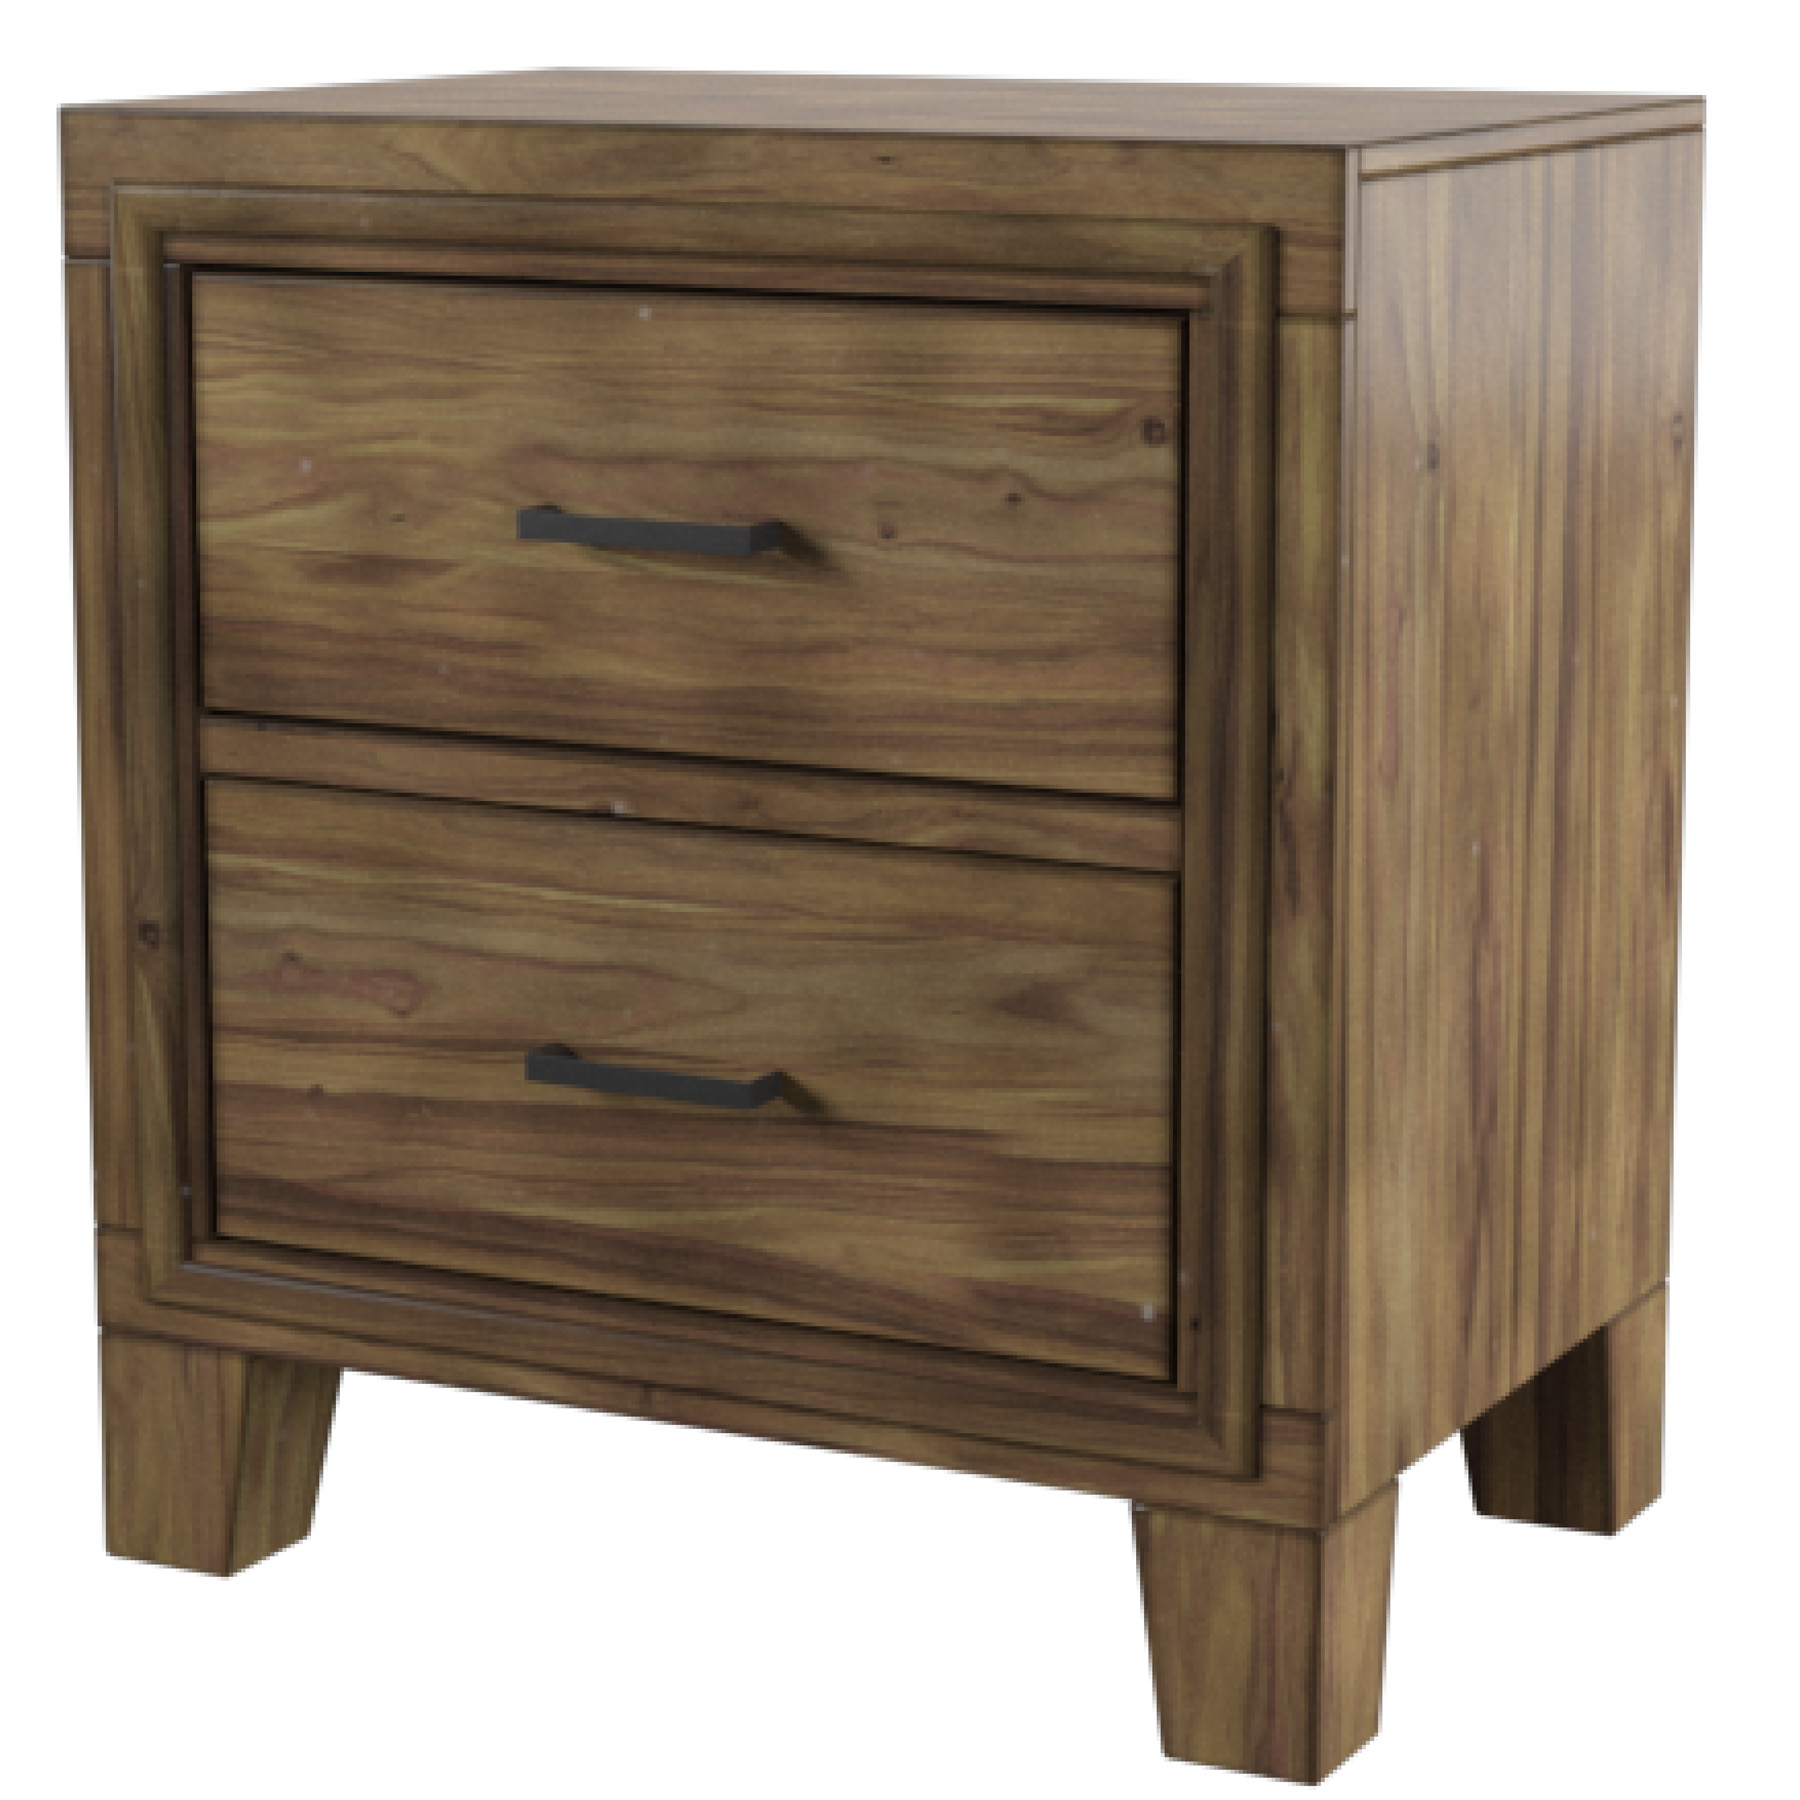 Furniture of America Gaia Rustic Oak 2-drawer Nightstand